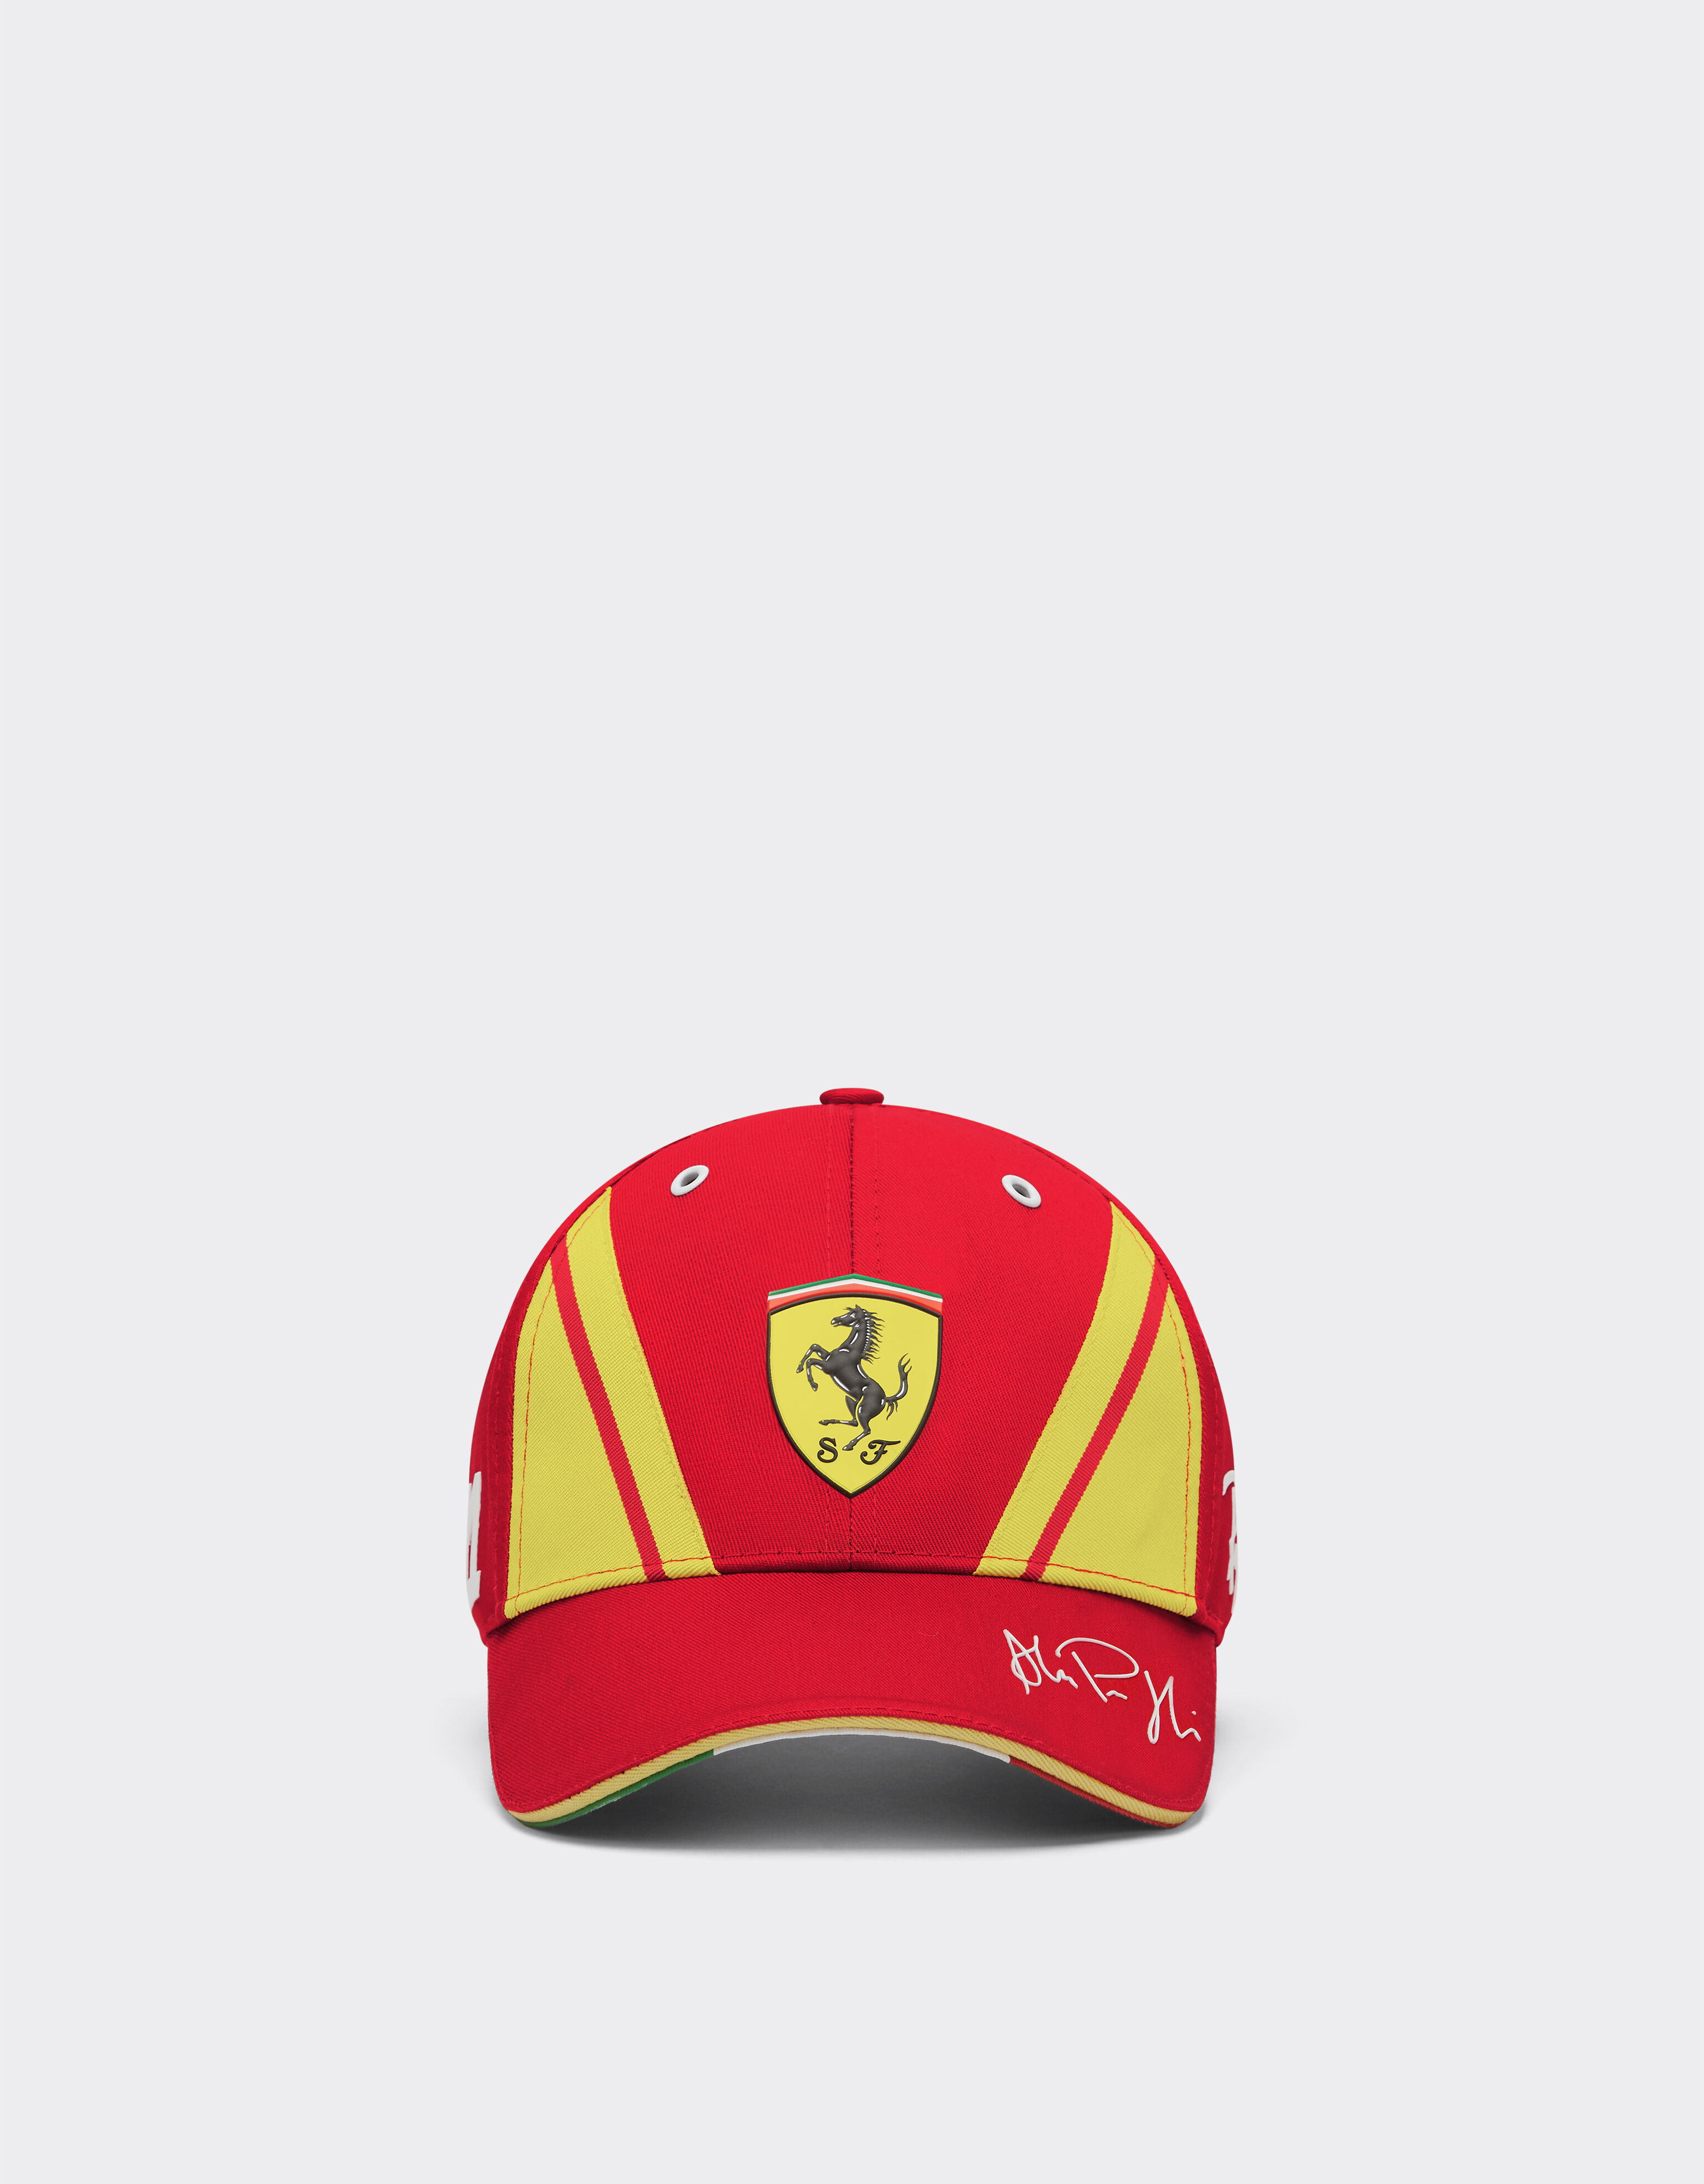 ${brand} Guidi Ferrari Hypercar Baseballcap - Limited Edition ${colorDescription} ${masterID}